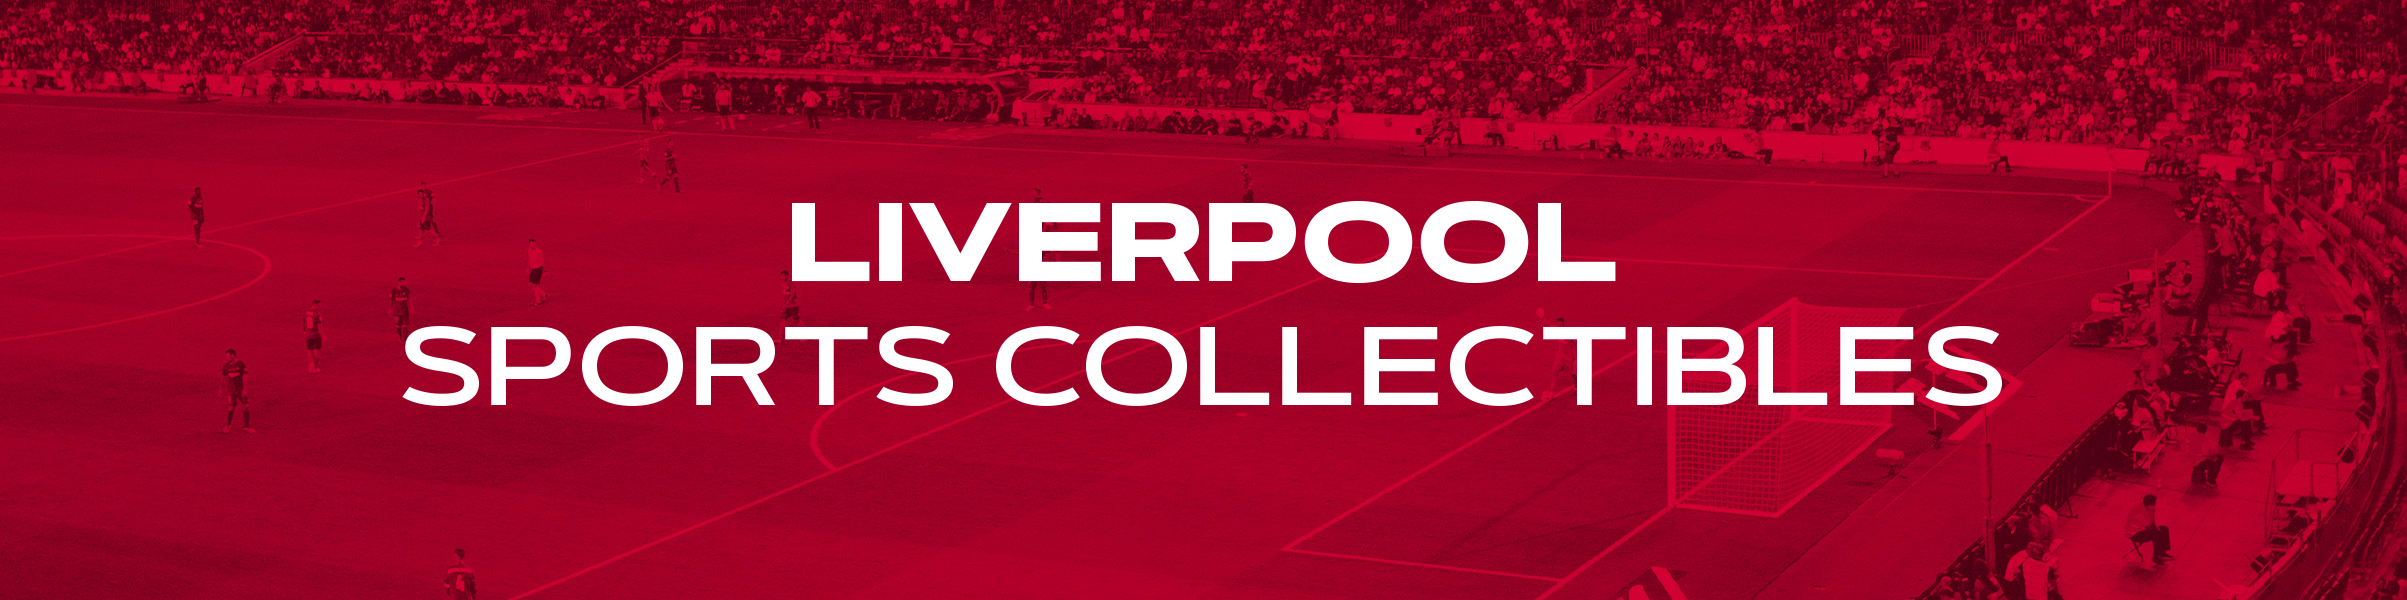 Liverpool Sports Collectibles for the biggest Premier League fans